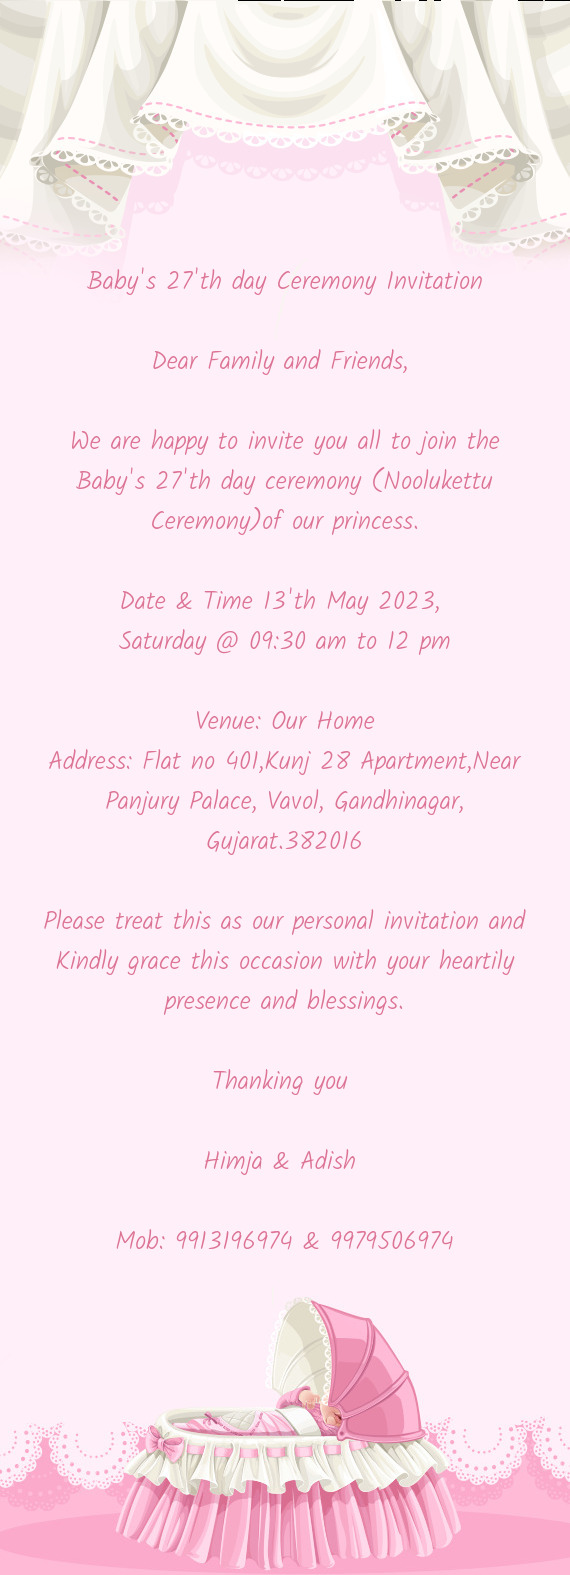 Address: Flat no 401,Kunj 28 Apartment,Near Panjury Palace, Vavol, Gandhinagar, Gujarat.382016